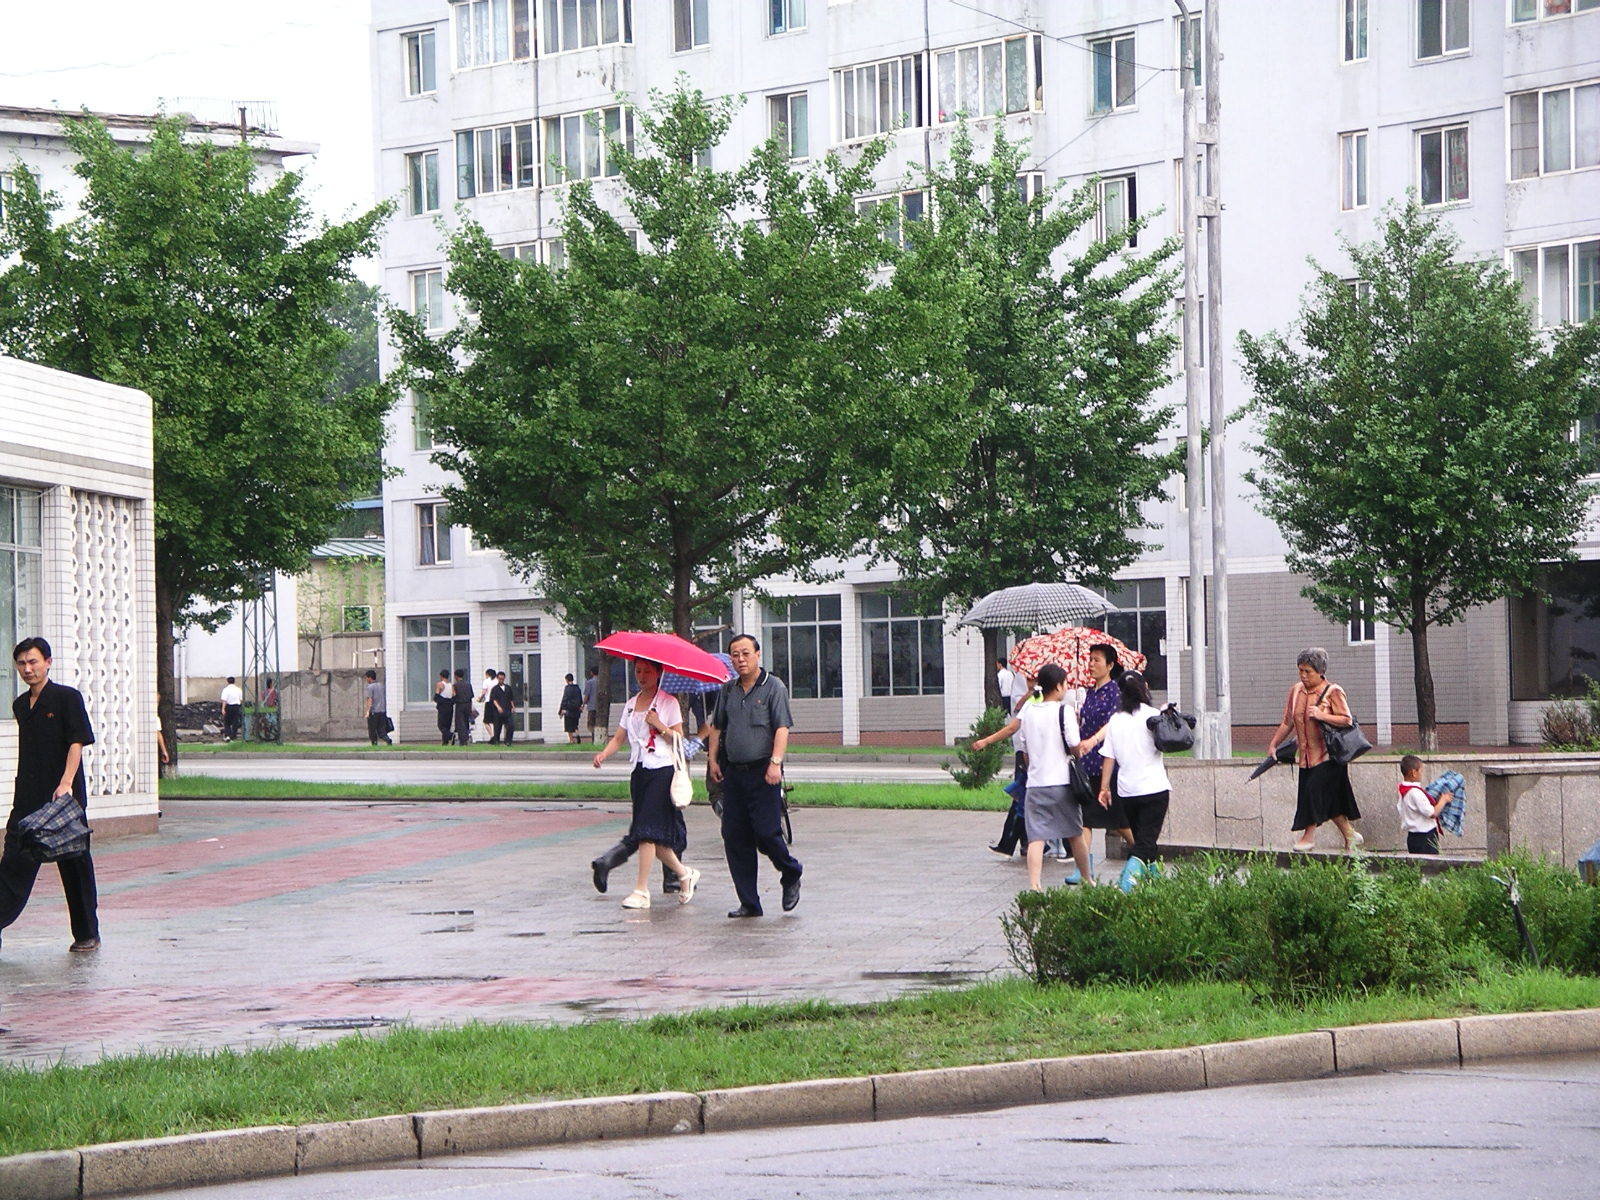 People on a city street under umbrellas in rain